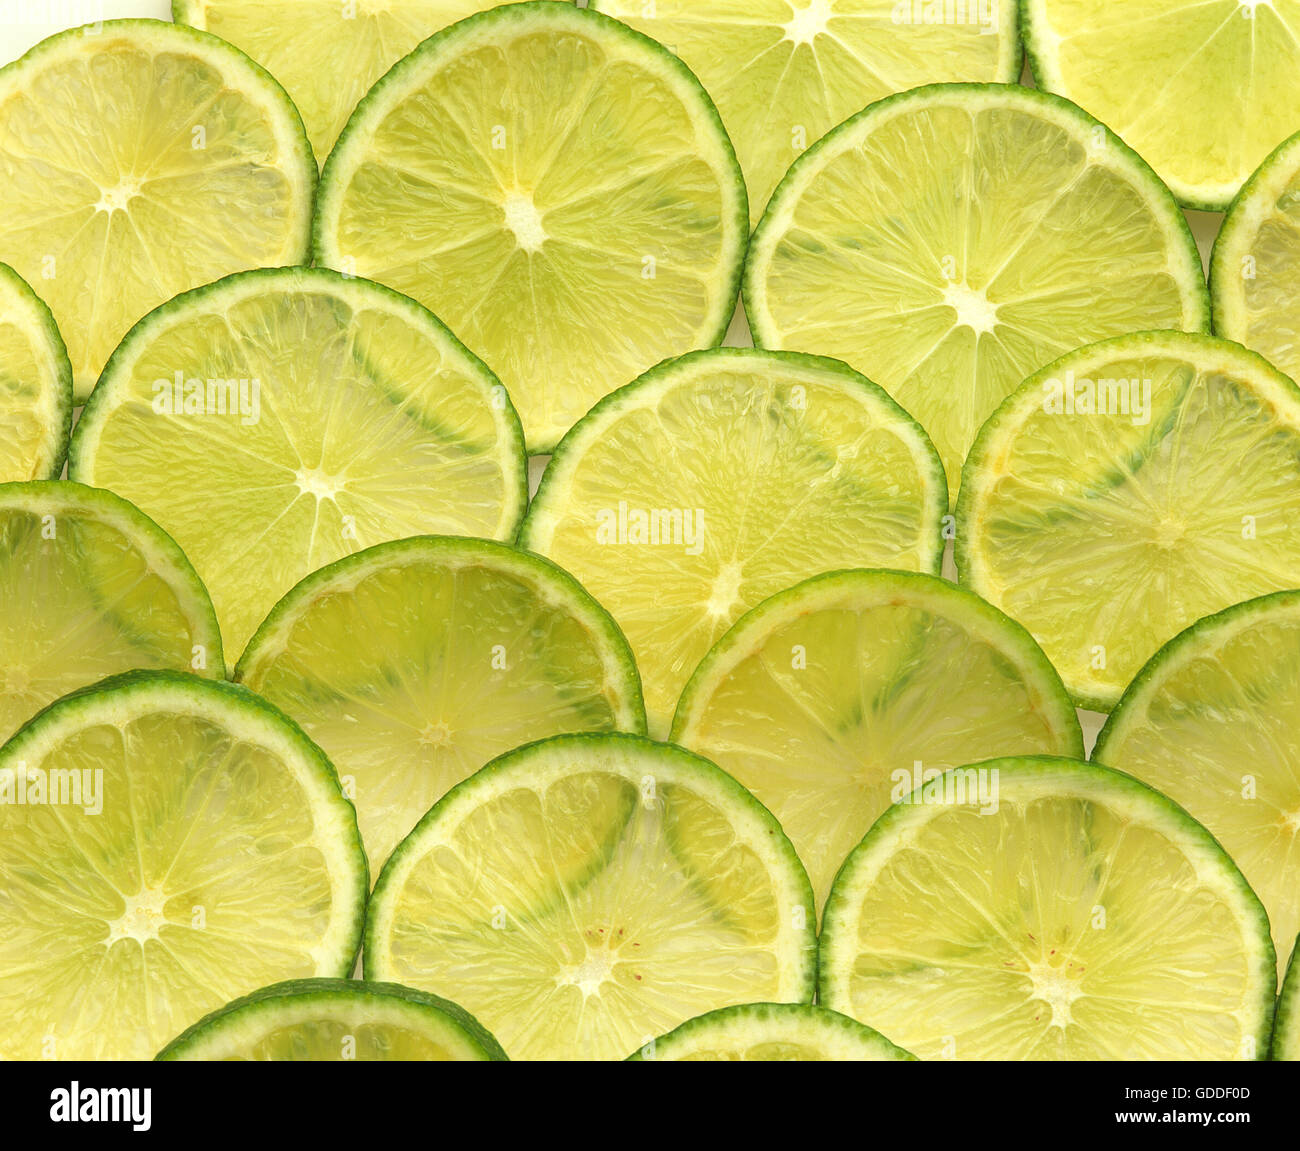 Zitronenscheiben grün, citrus aurantifolia Stockfoto